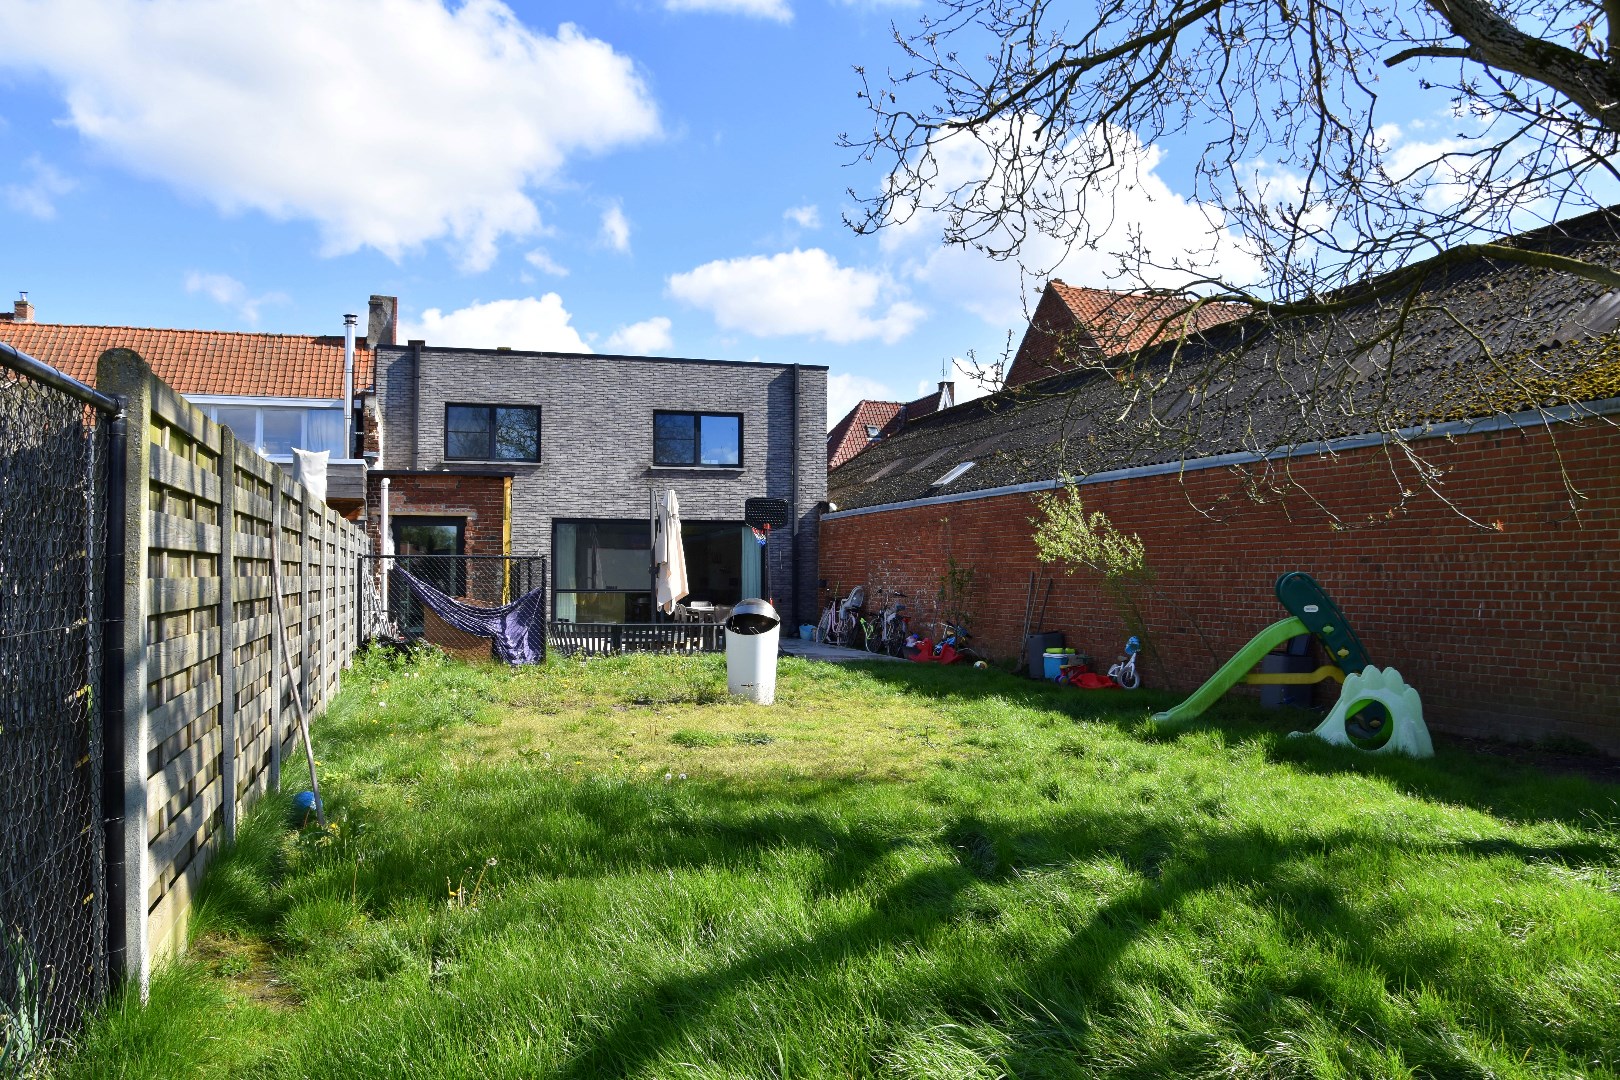 Gezinswoning met 4 slaapkamers, garage en grote zonnige tuin te koop in Rollegem foto 17